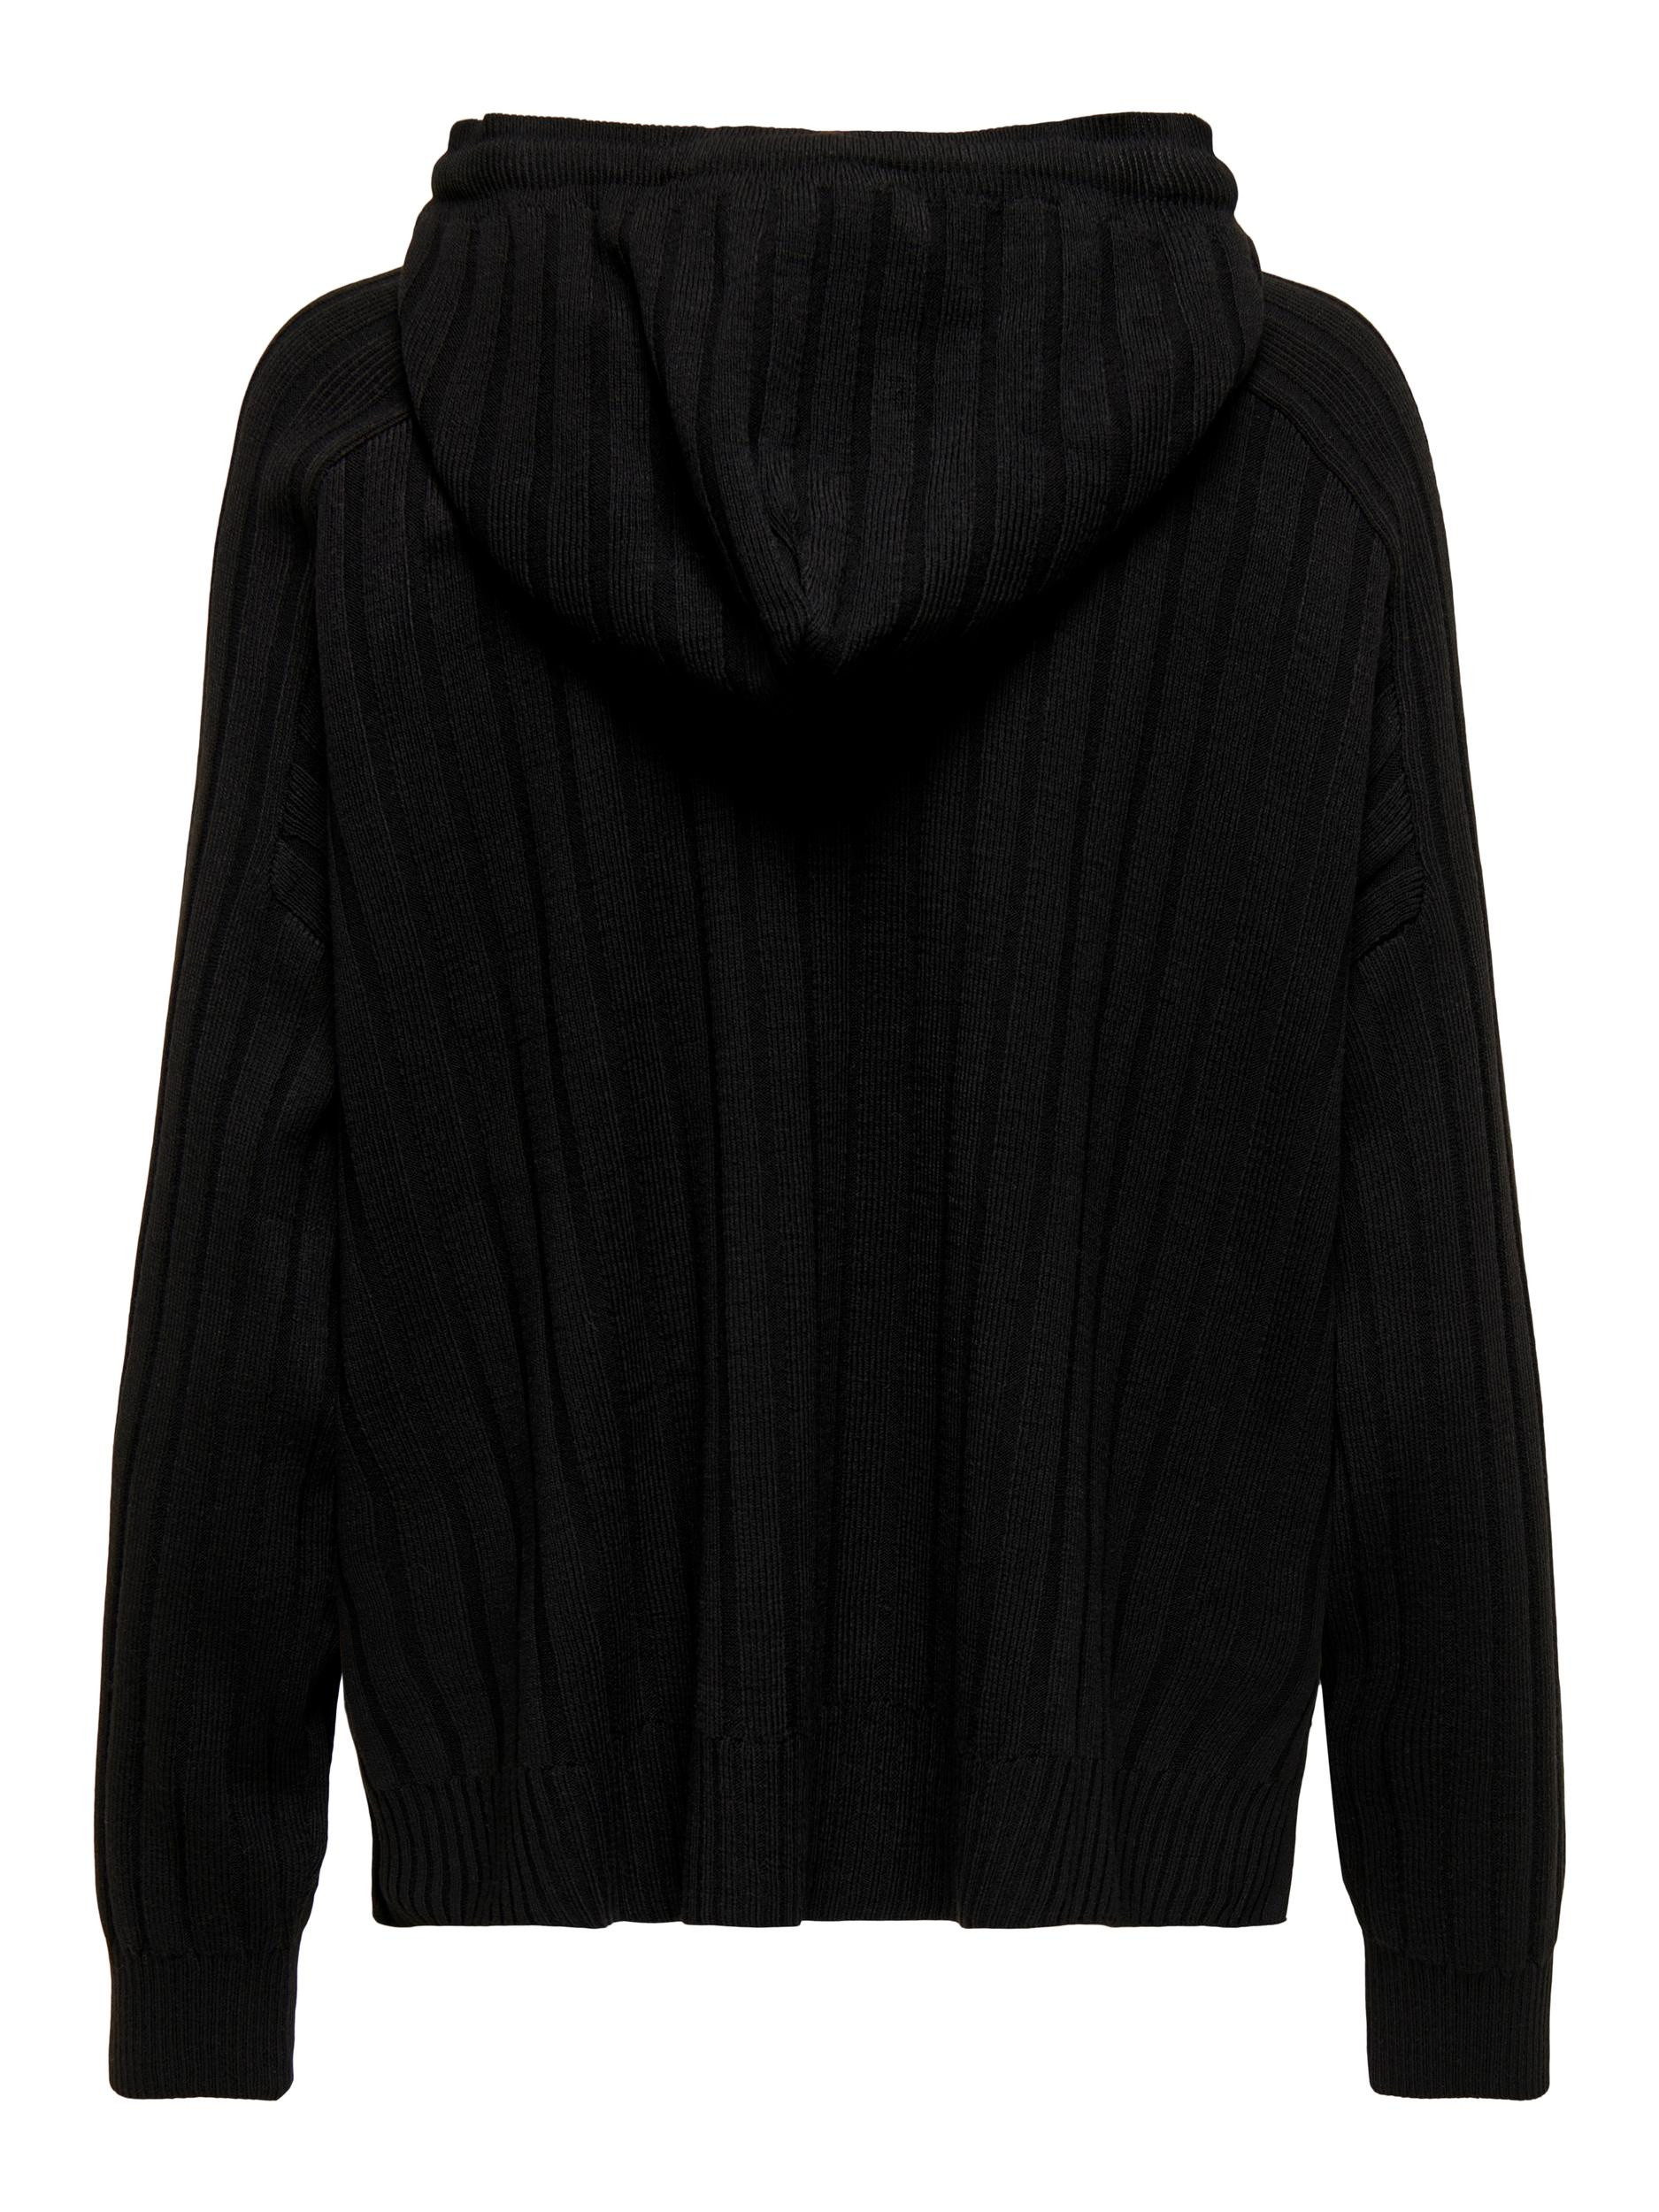 sweatshirt with hood, Black, large image number 1